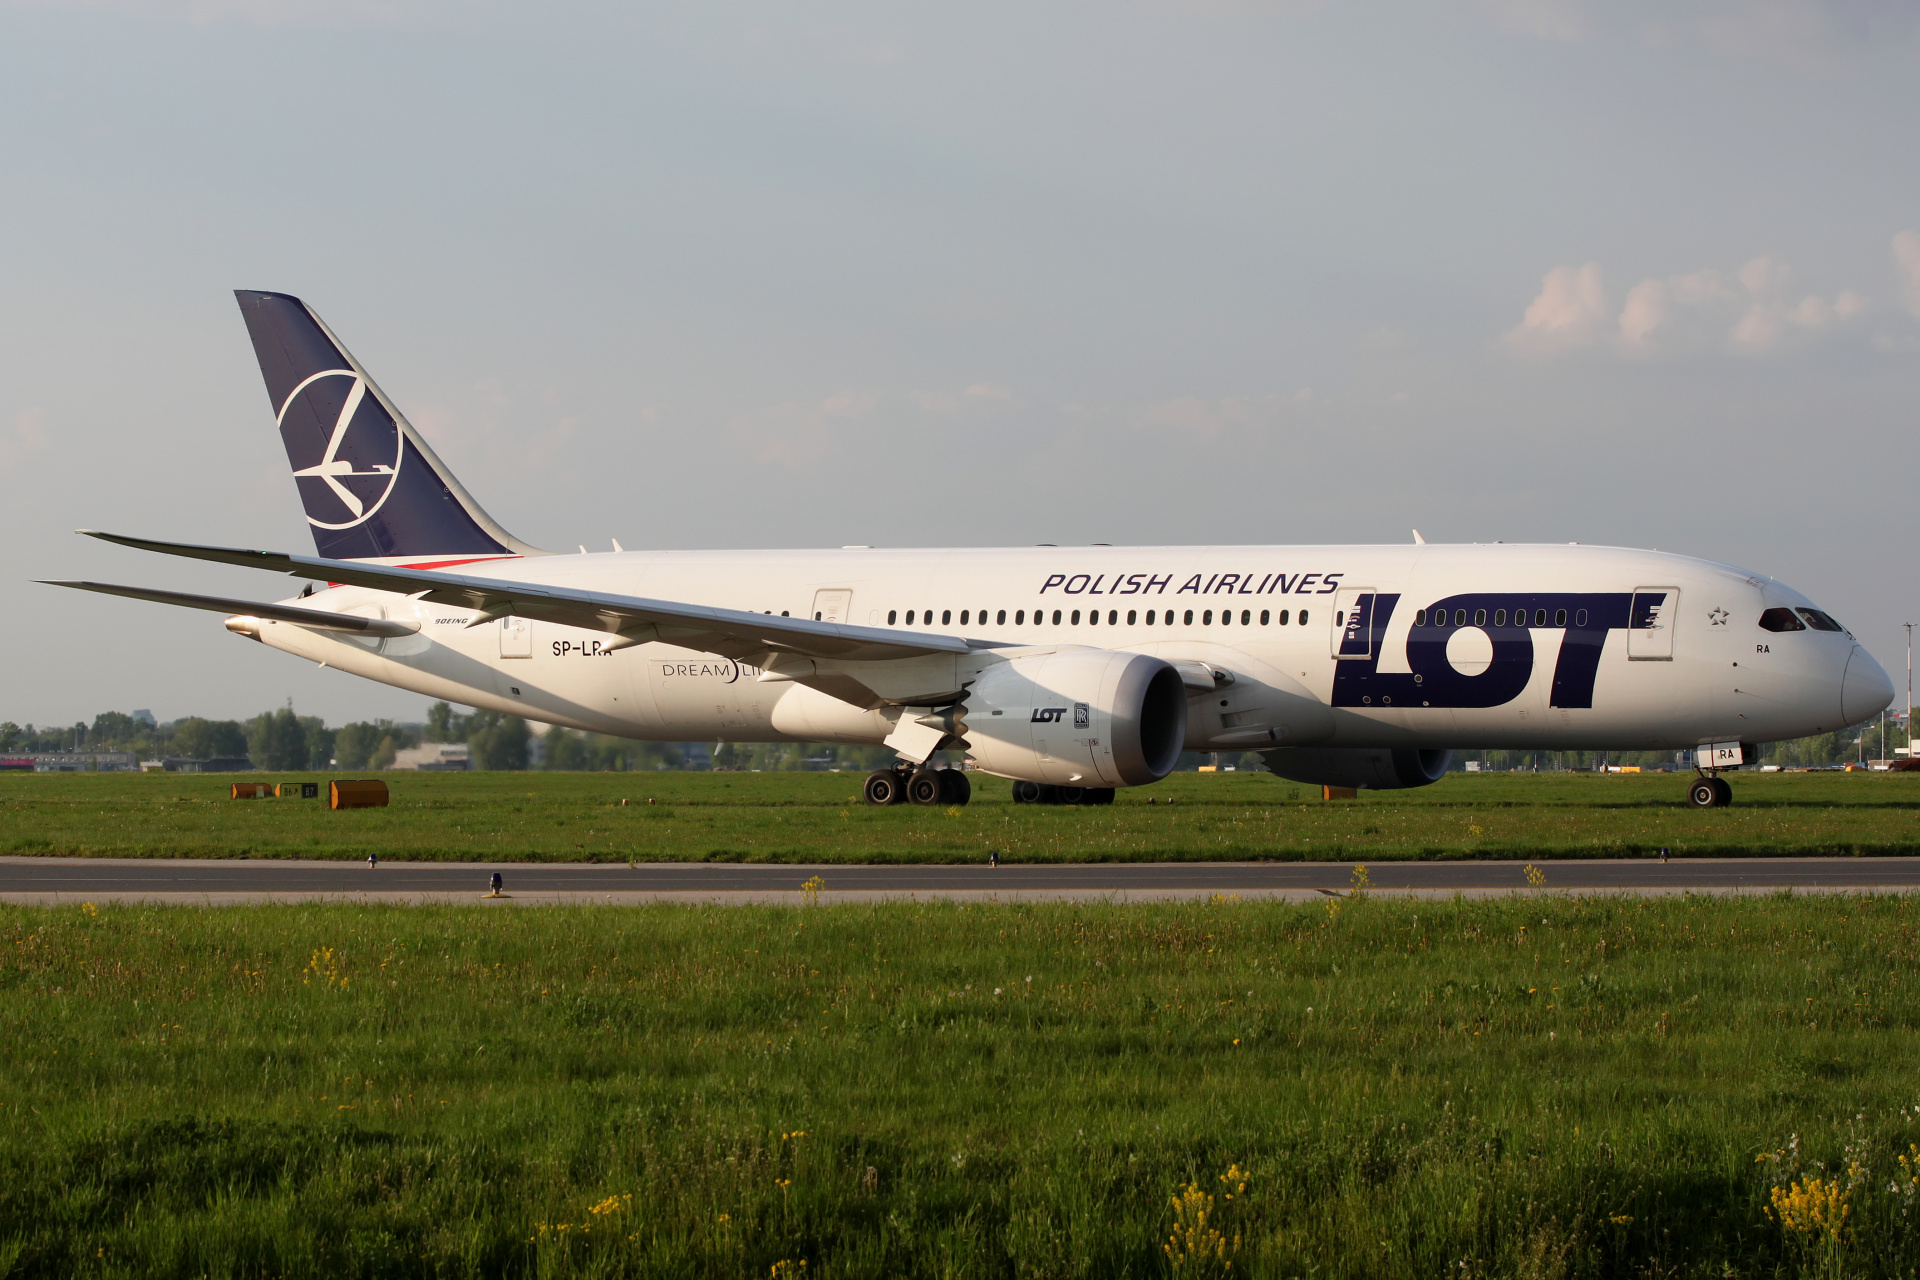 SP-LRA (Aircraft » EPWA Spotting » Boeing 787-8 Dreamliner » LOT Polish Airlines)